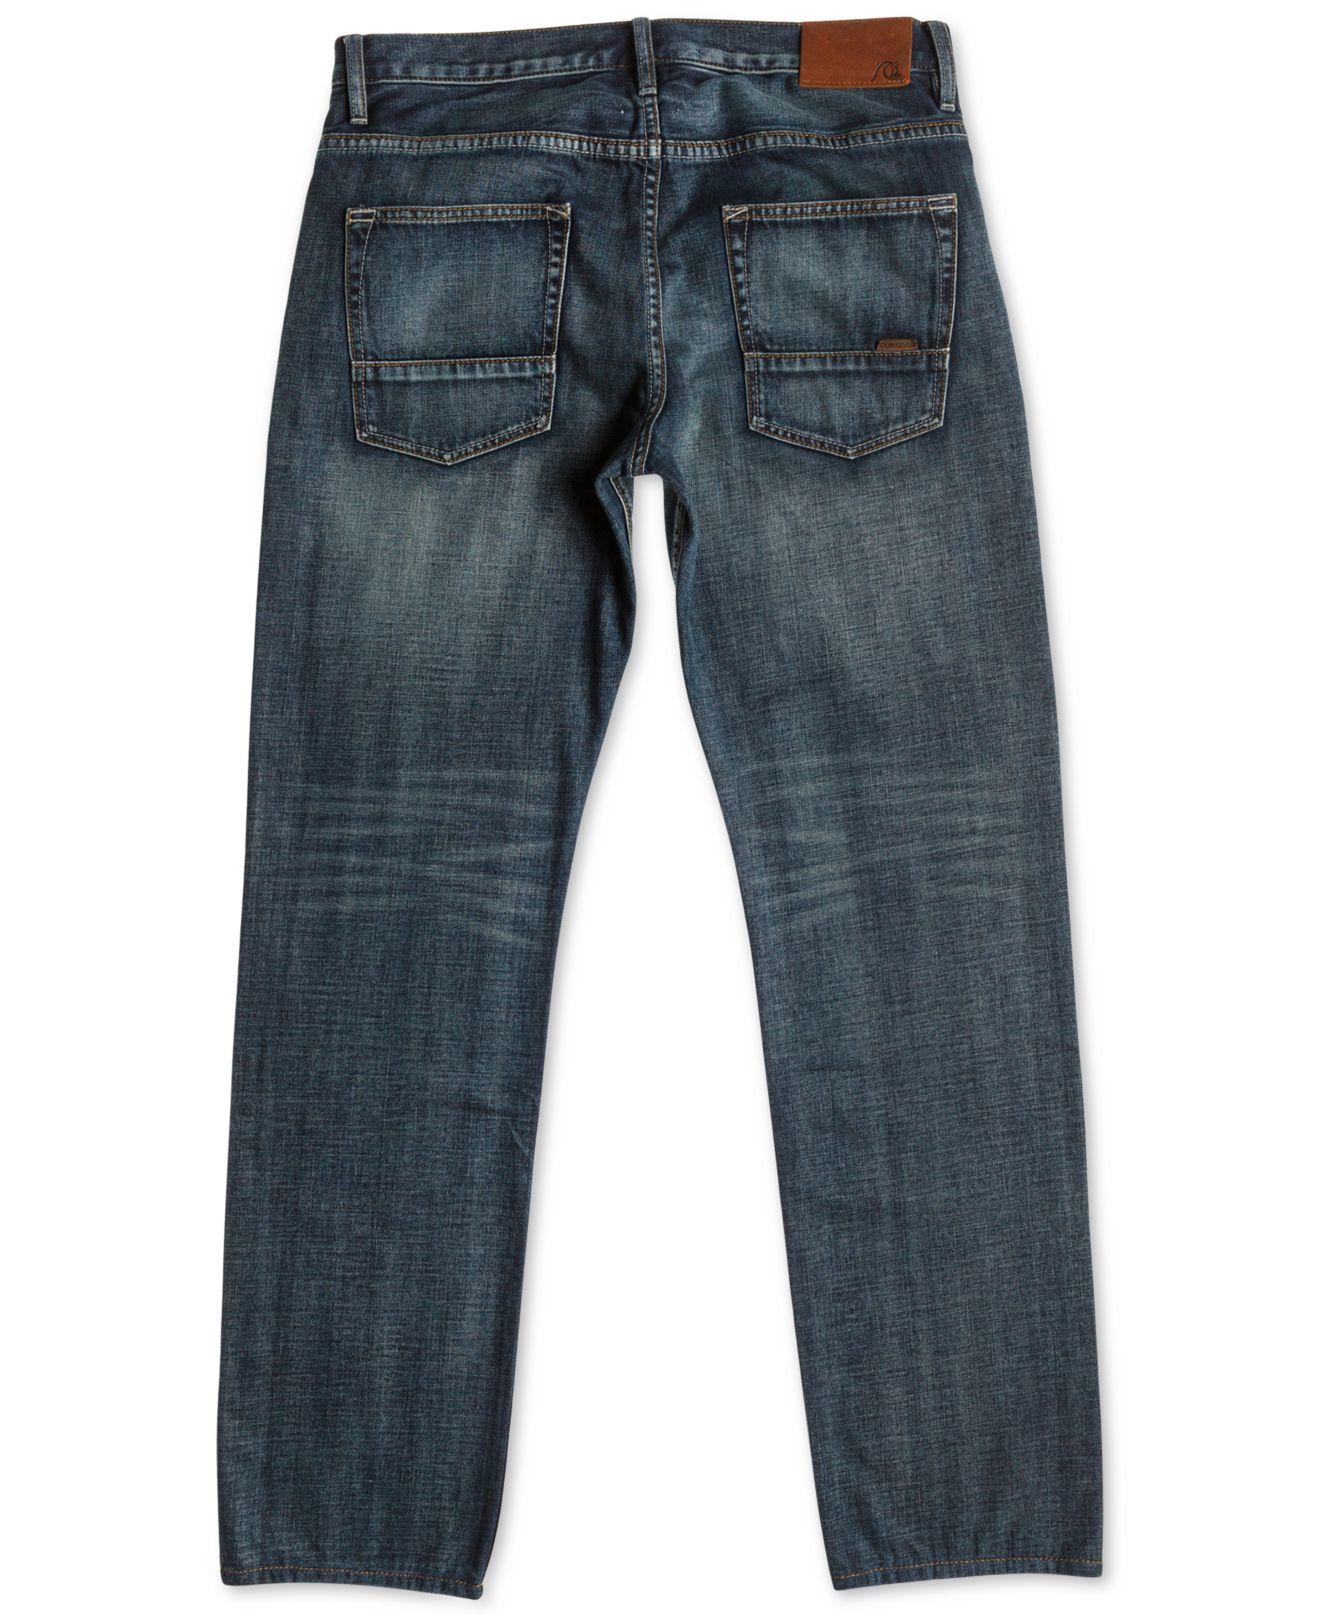 Lyst - Quiksilver Sequel Vintage Cracked Regular-fit Jeans in Blue for Men